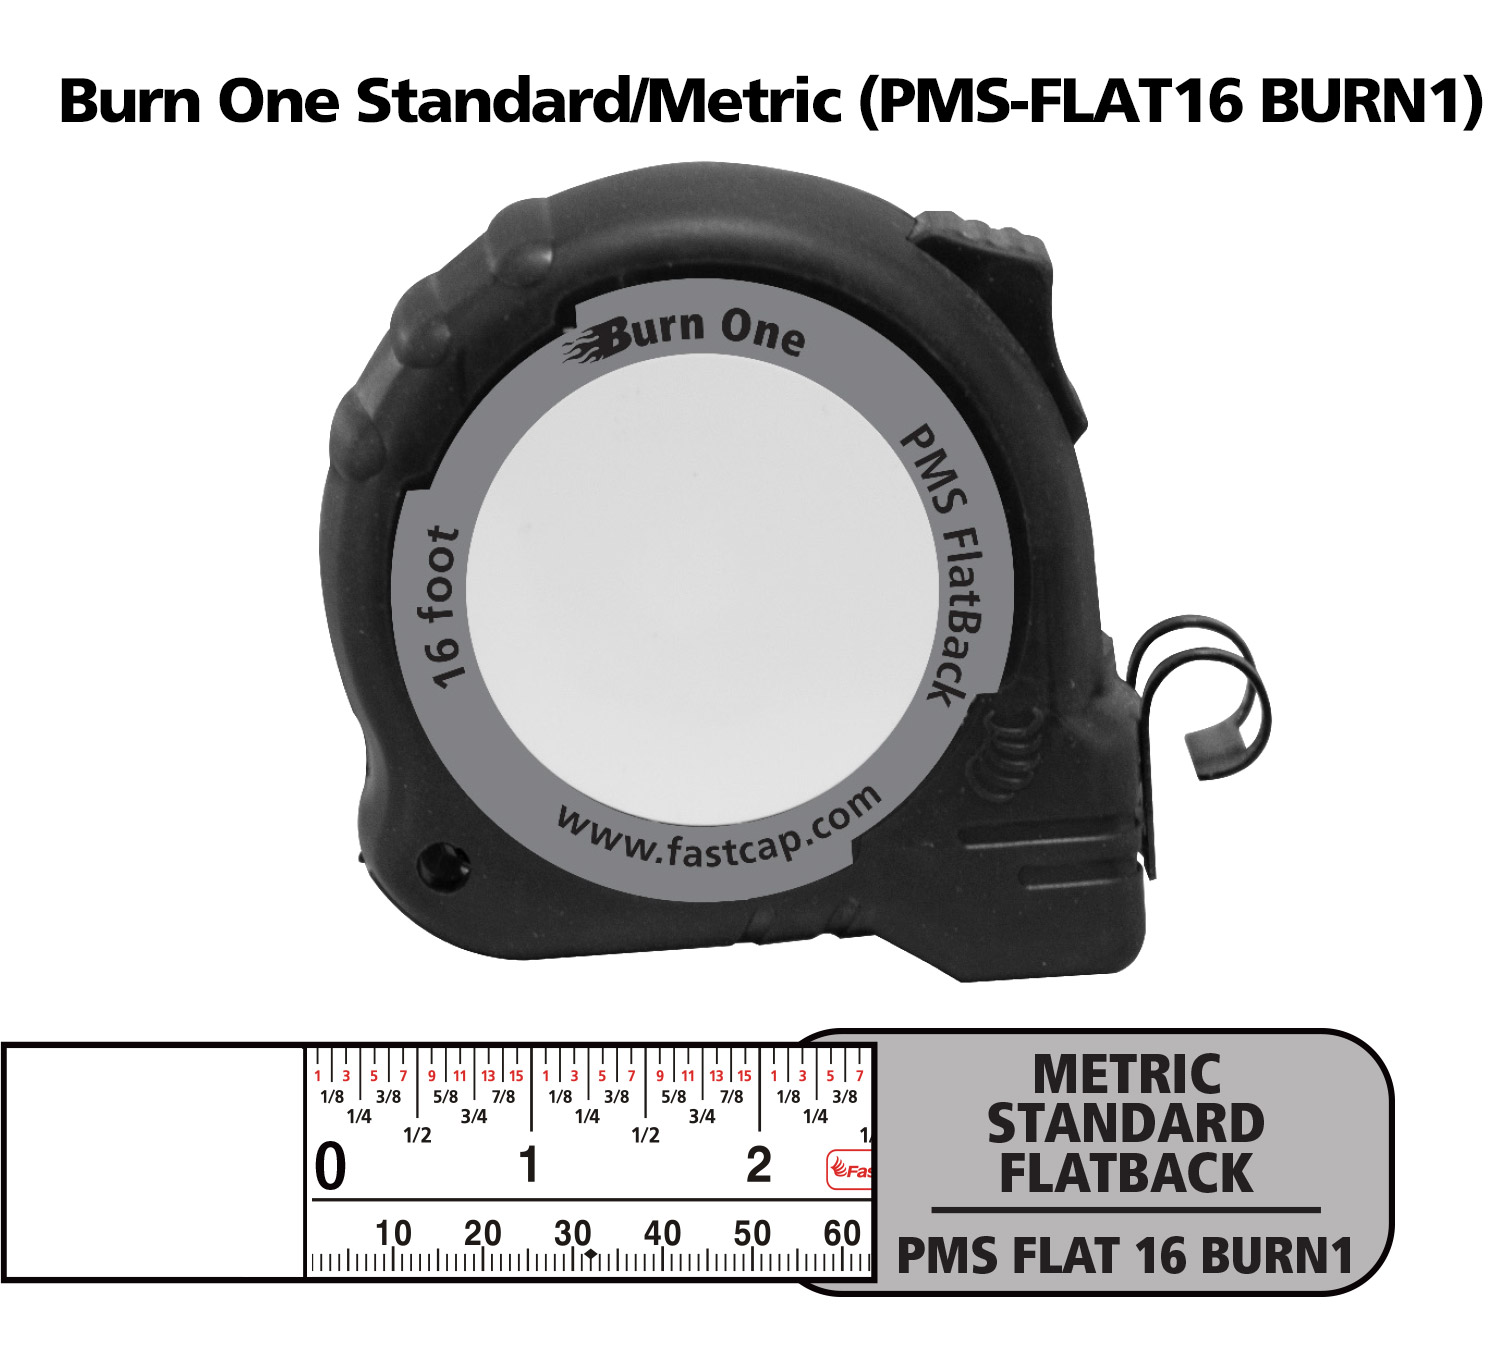 FastCap PS-FLAT16 16-Feet Old Standby Standard Flatback Tape Measure 